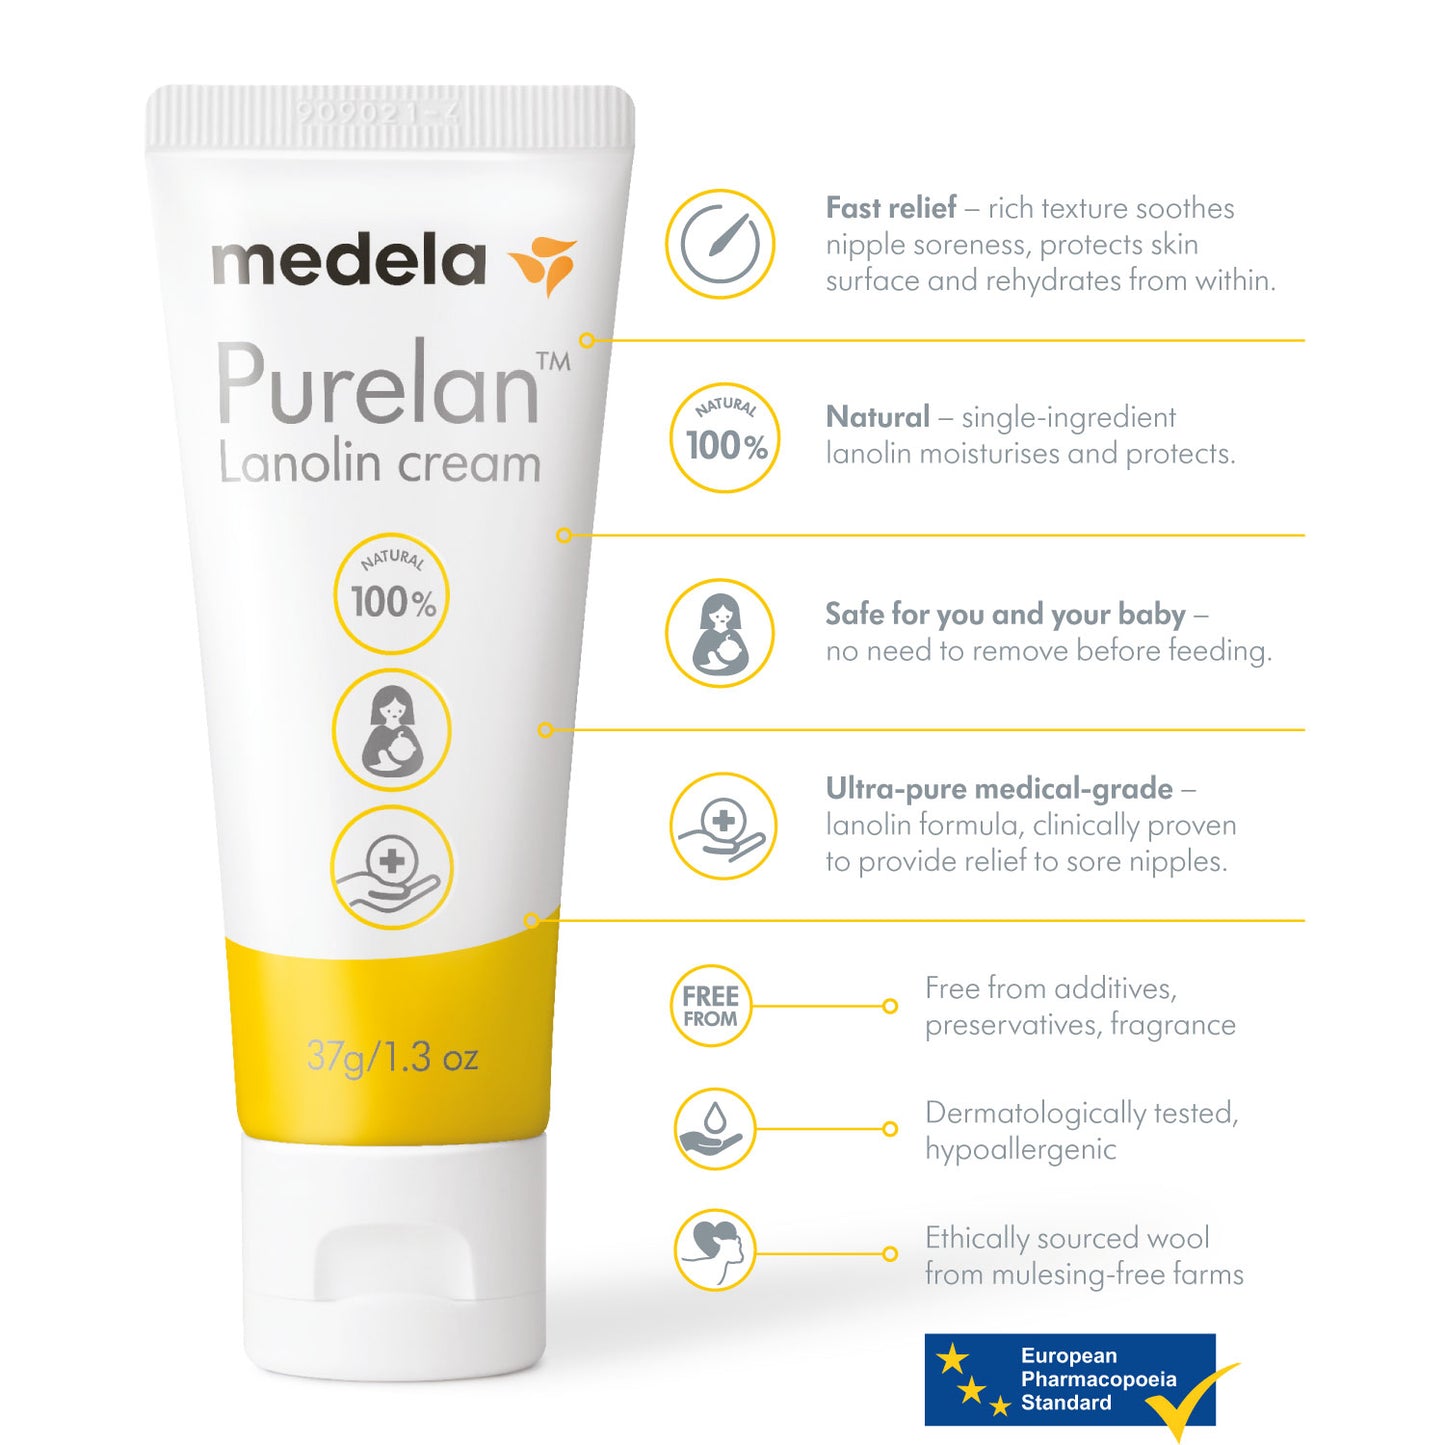 Medela - Purelan Lanolin Cream